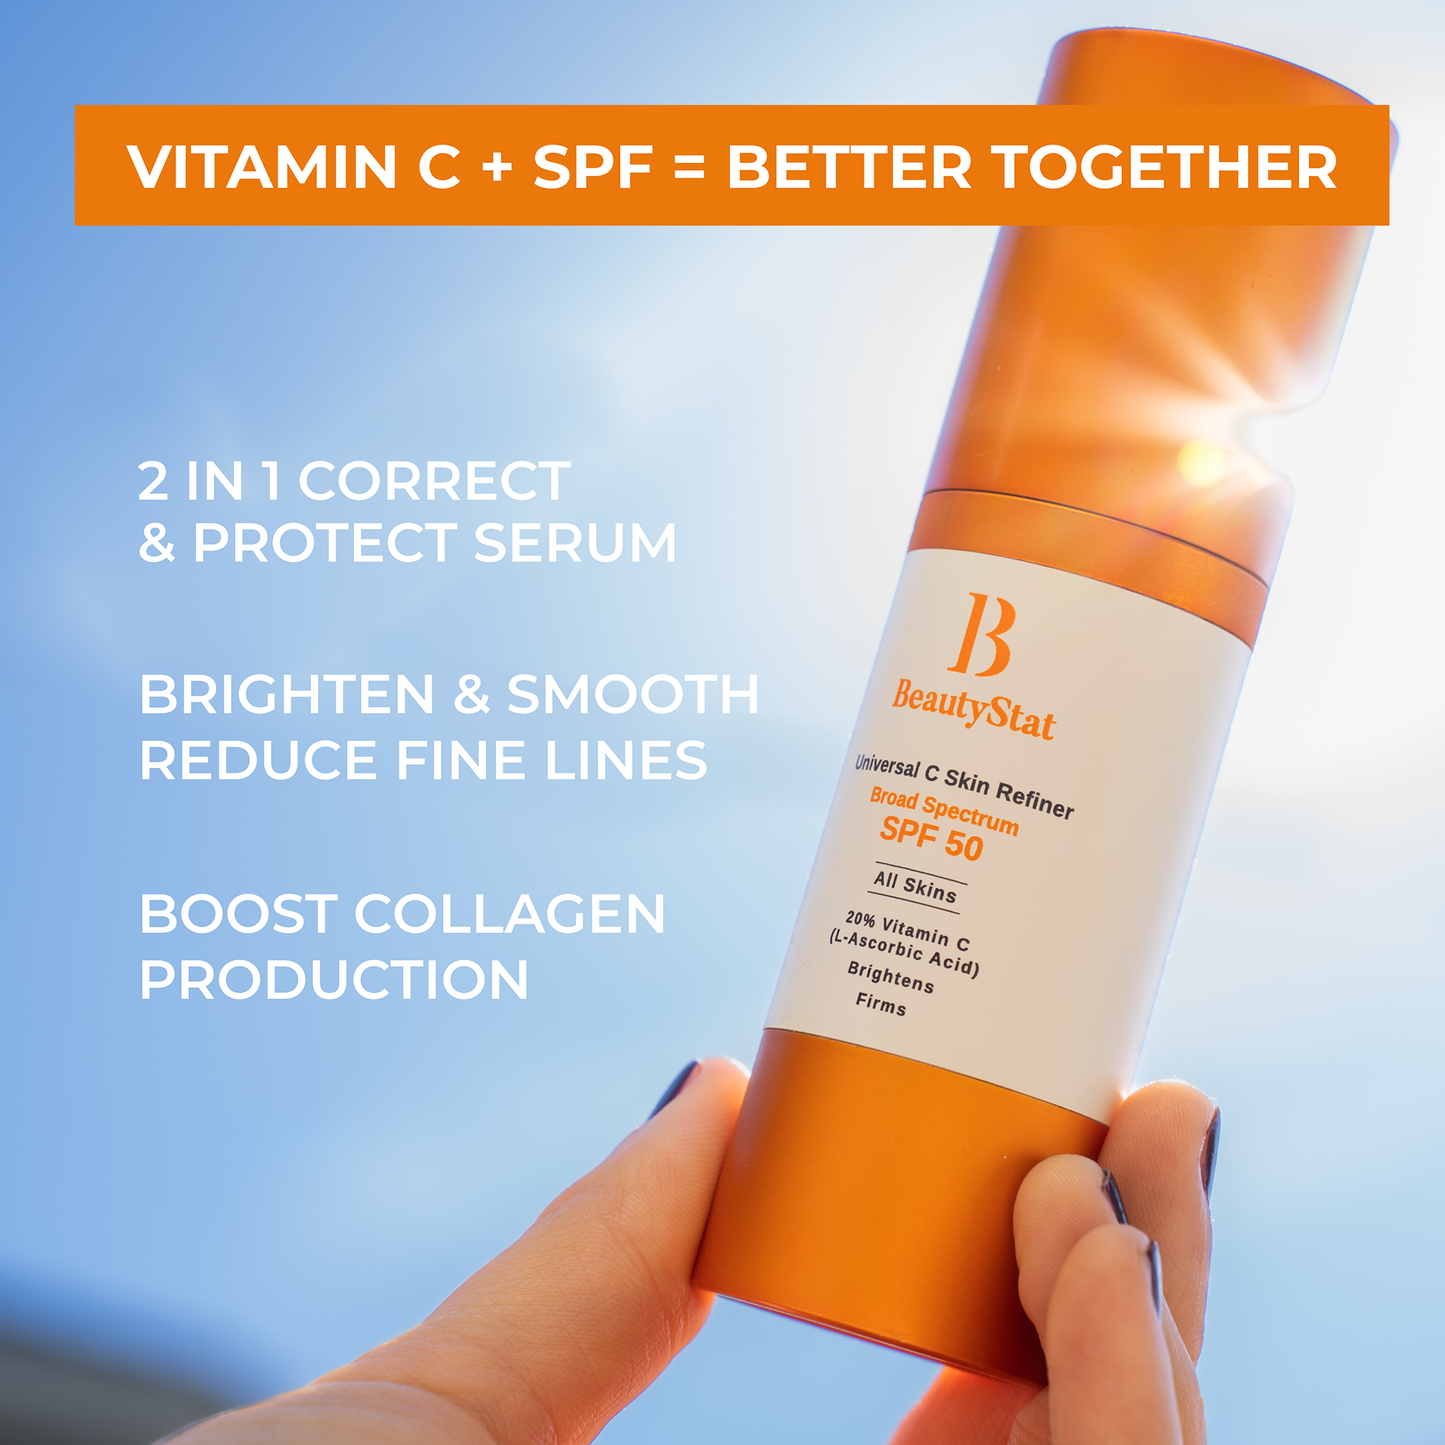 BeautyStat: Universal C Skin Refiner Vitamin C Serum + SPF50 Mineral Sunscreen Travel Size